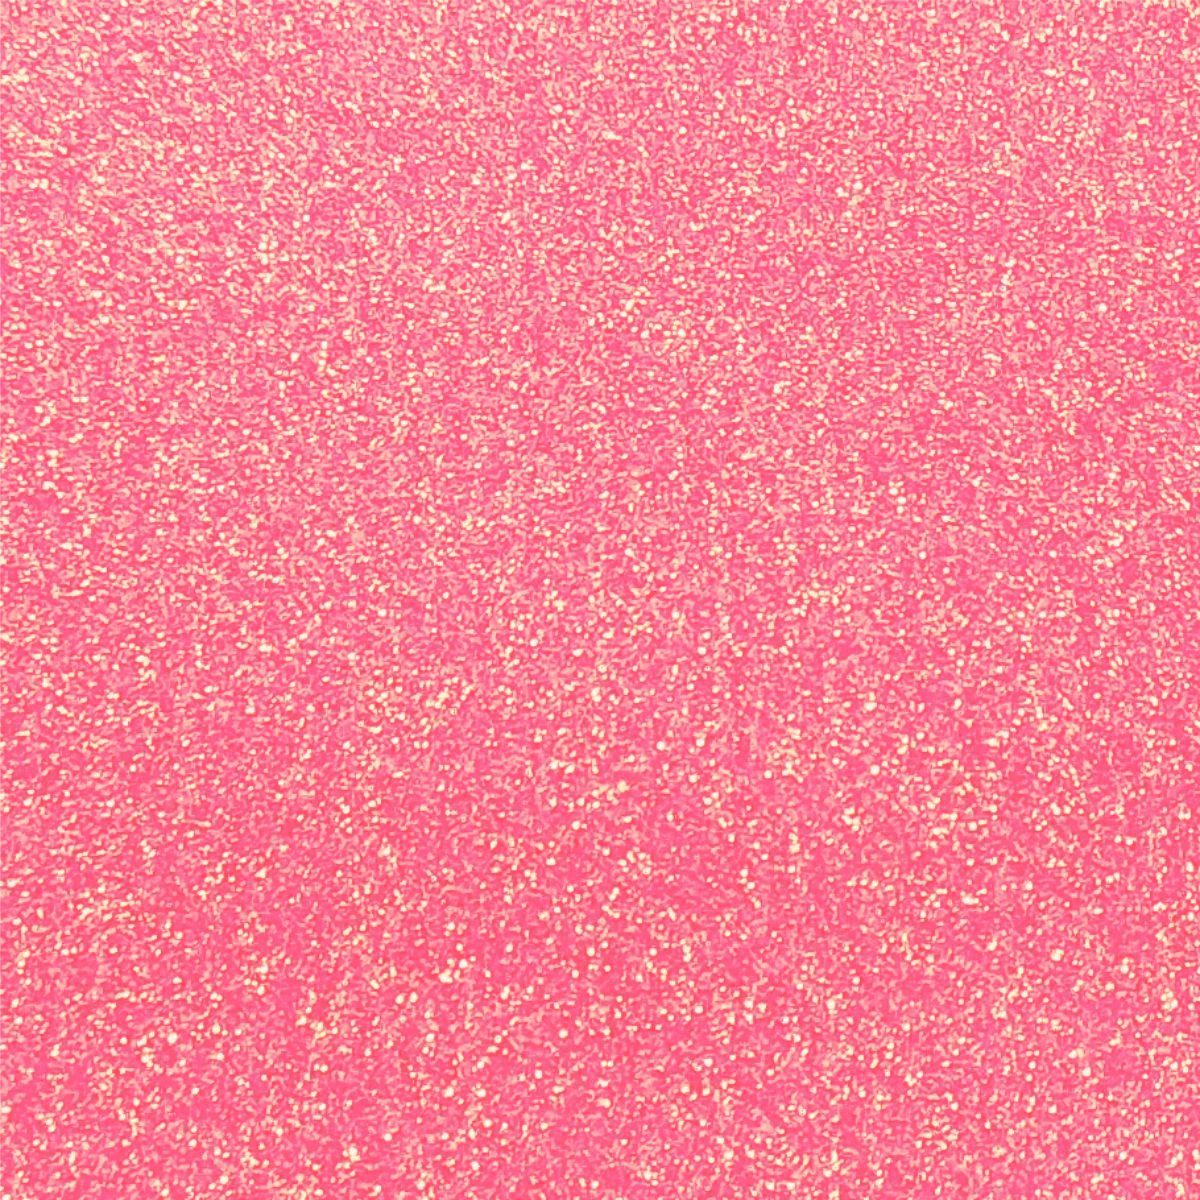 GlitterFlex Ultra Hot Pink Glitter HTV